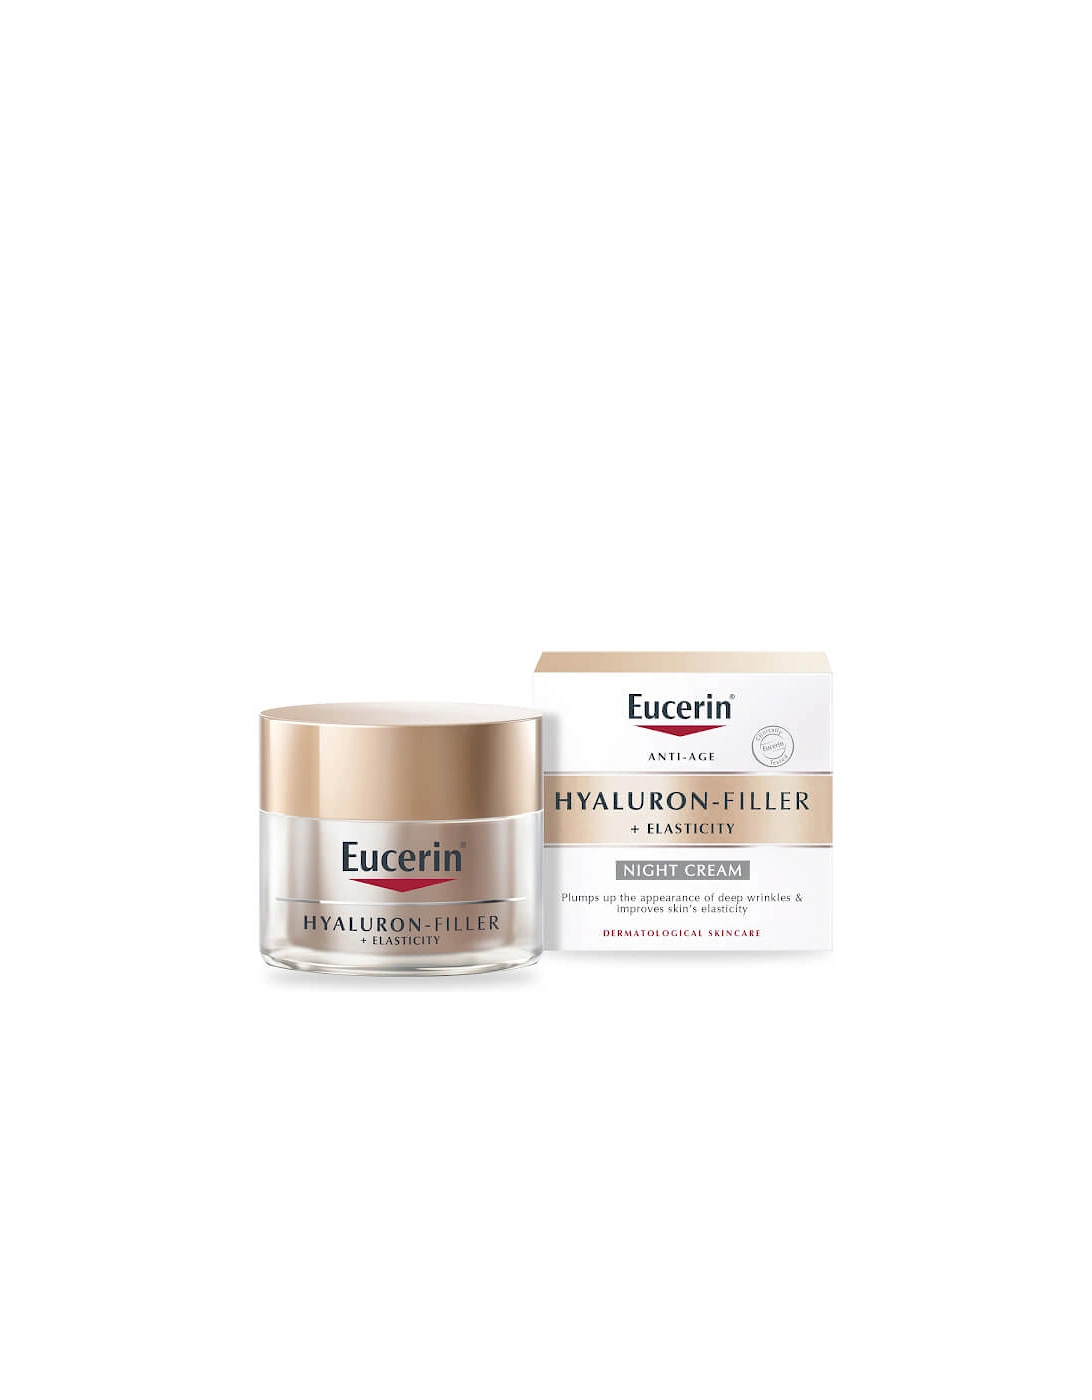 Hyaluron-Filler + Elasticity Night Cream 50ml - Eucerin, 2 of 1